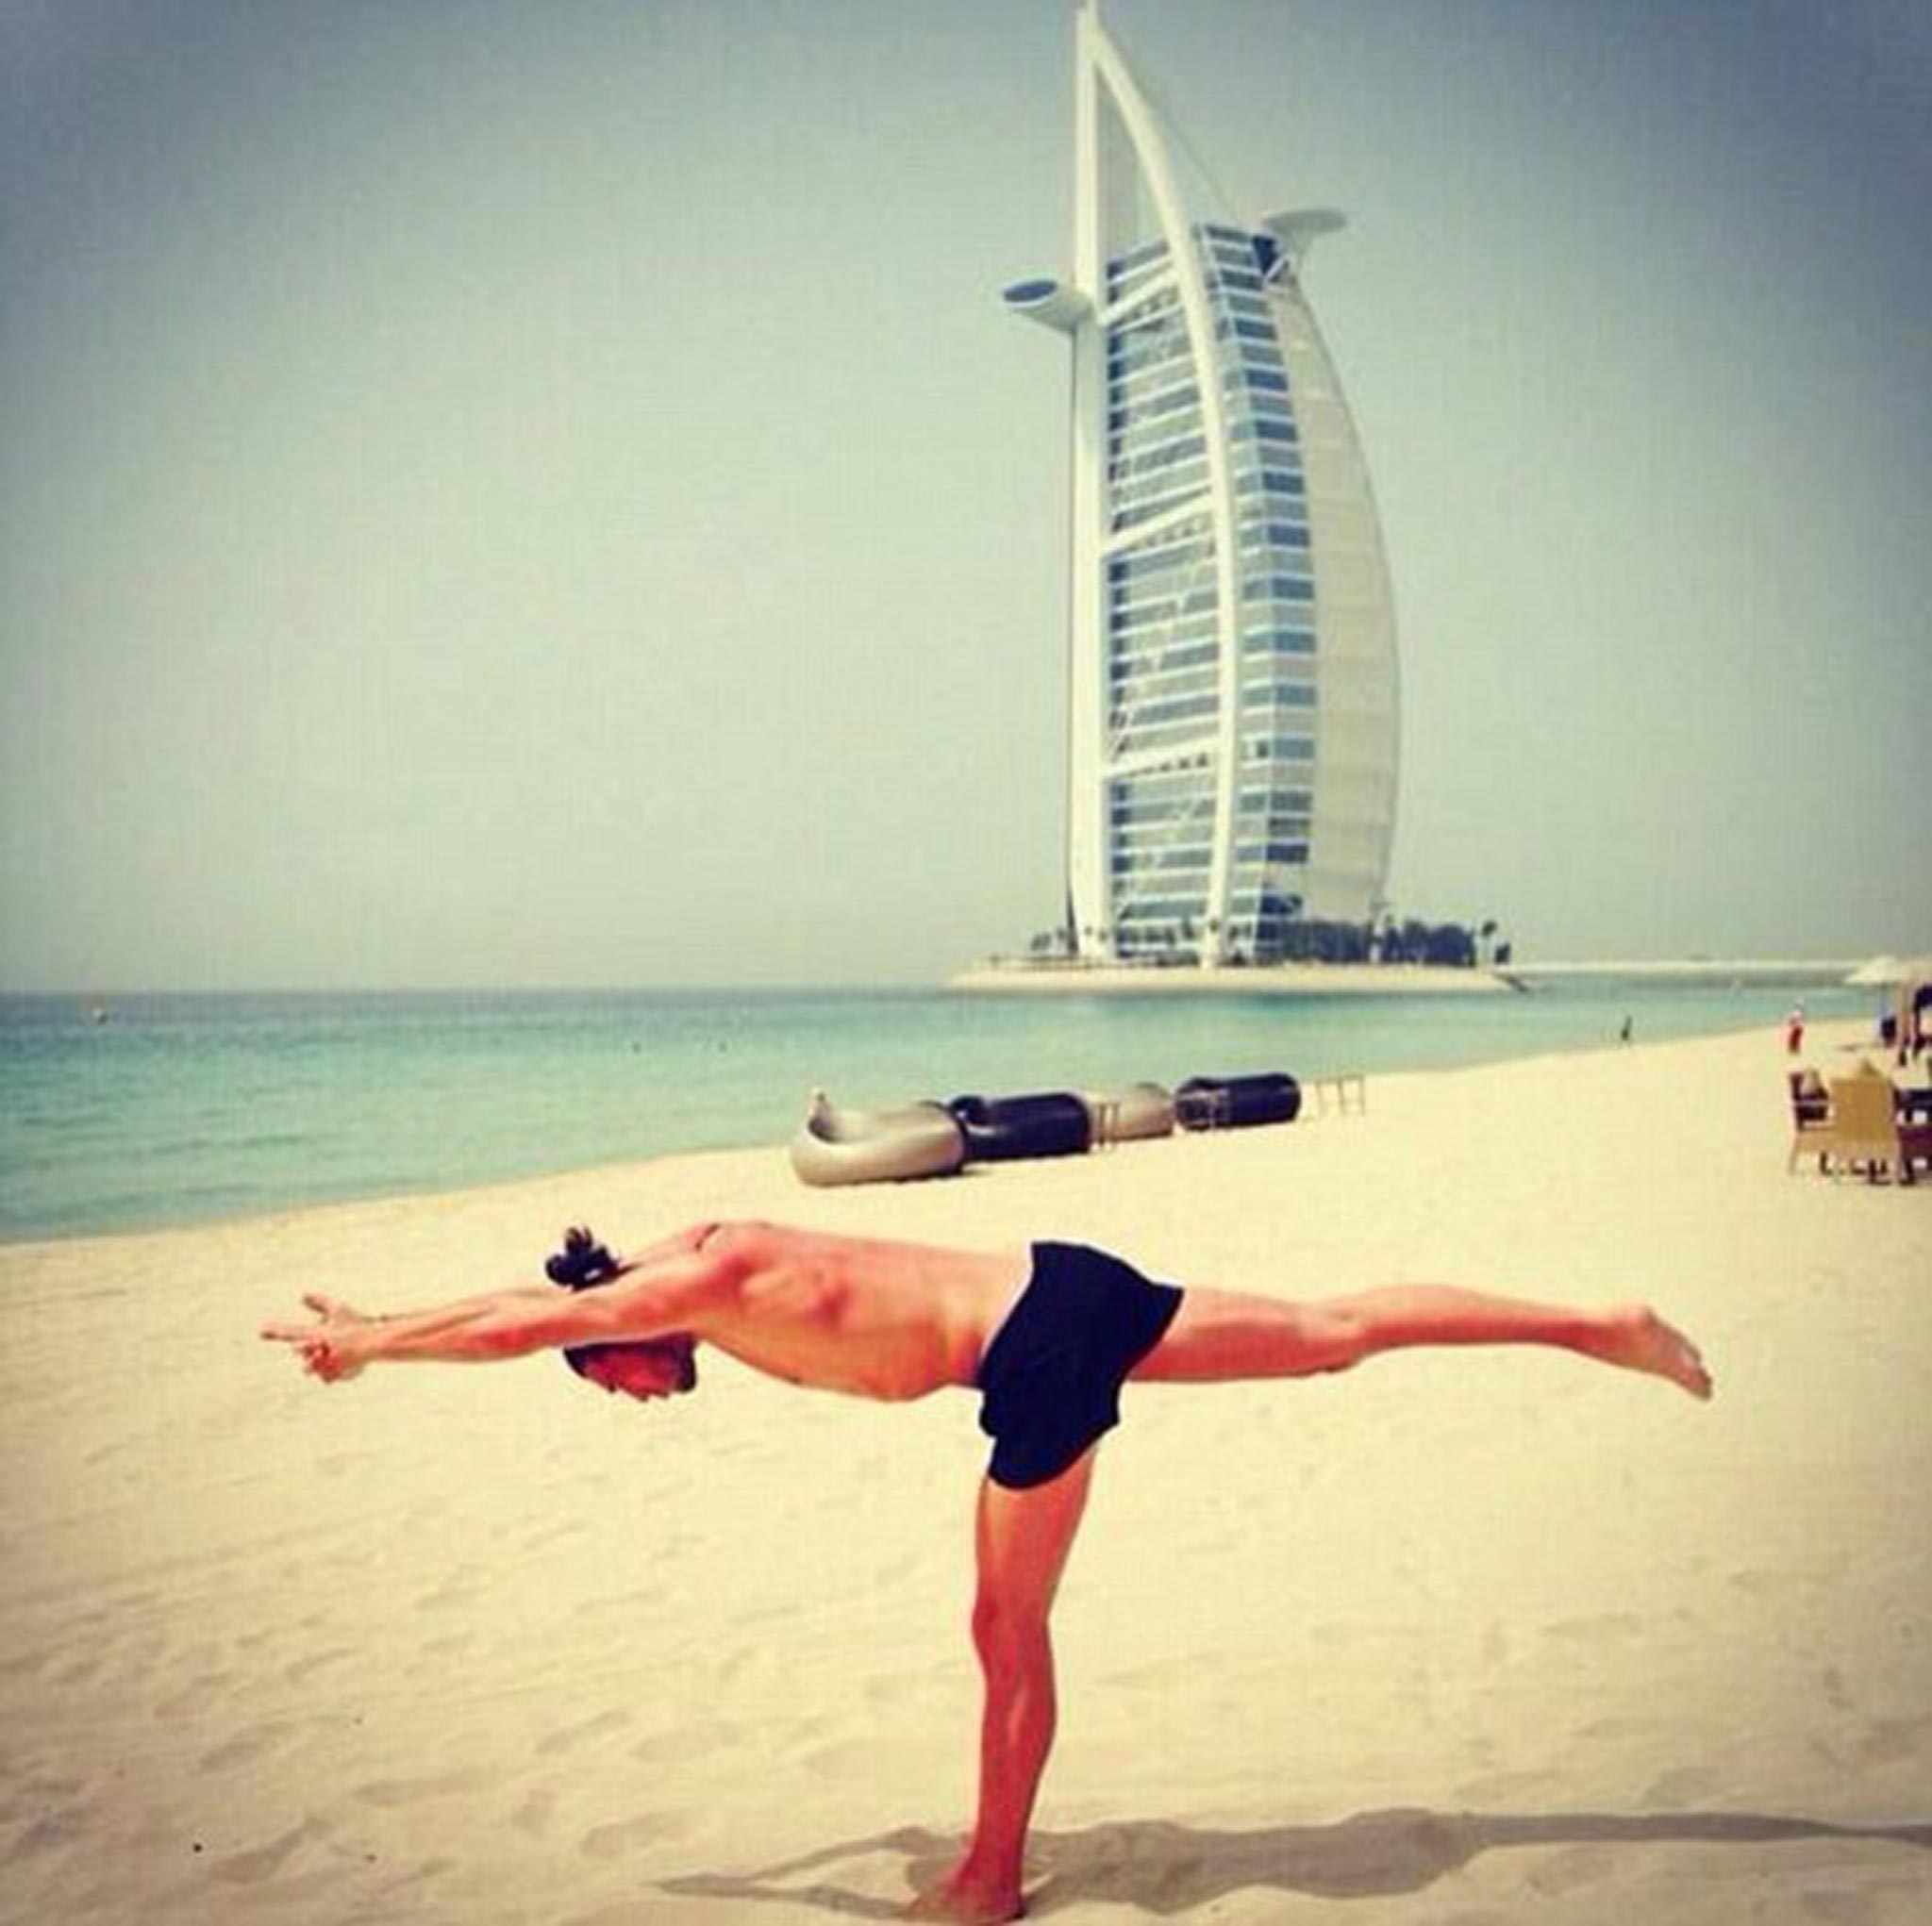 Andy Carroll practicing yoga on the beach in Dubai